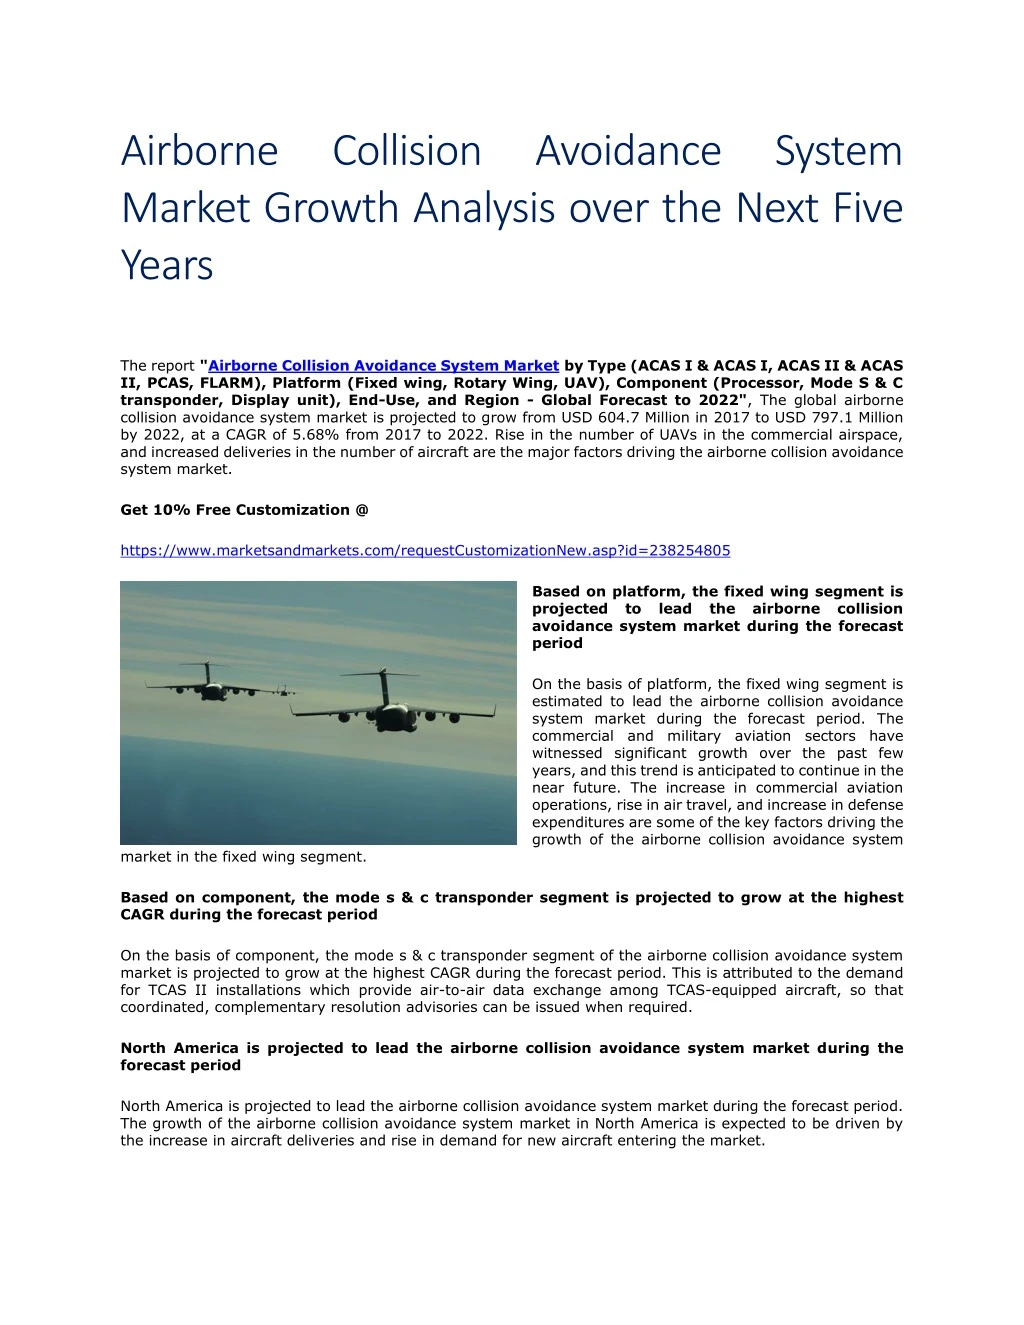 airborne market growth analysis over the next